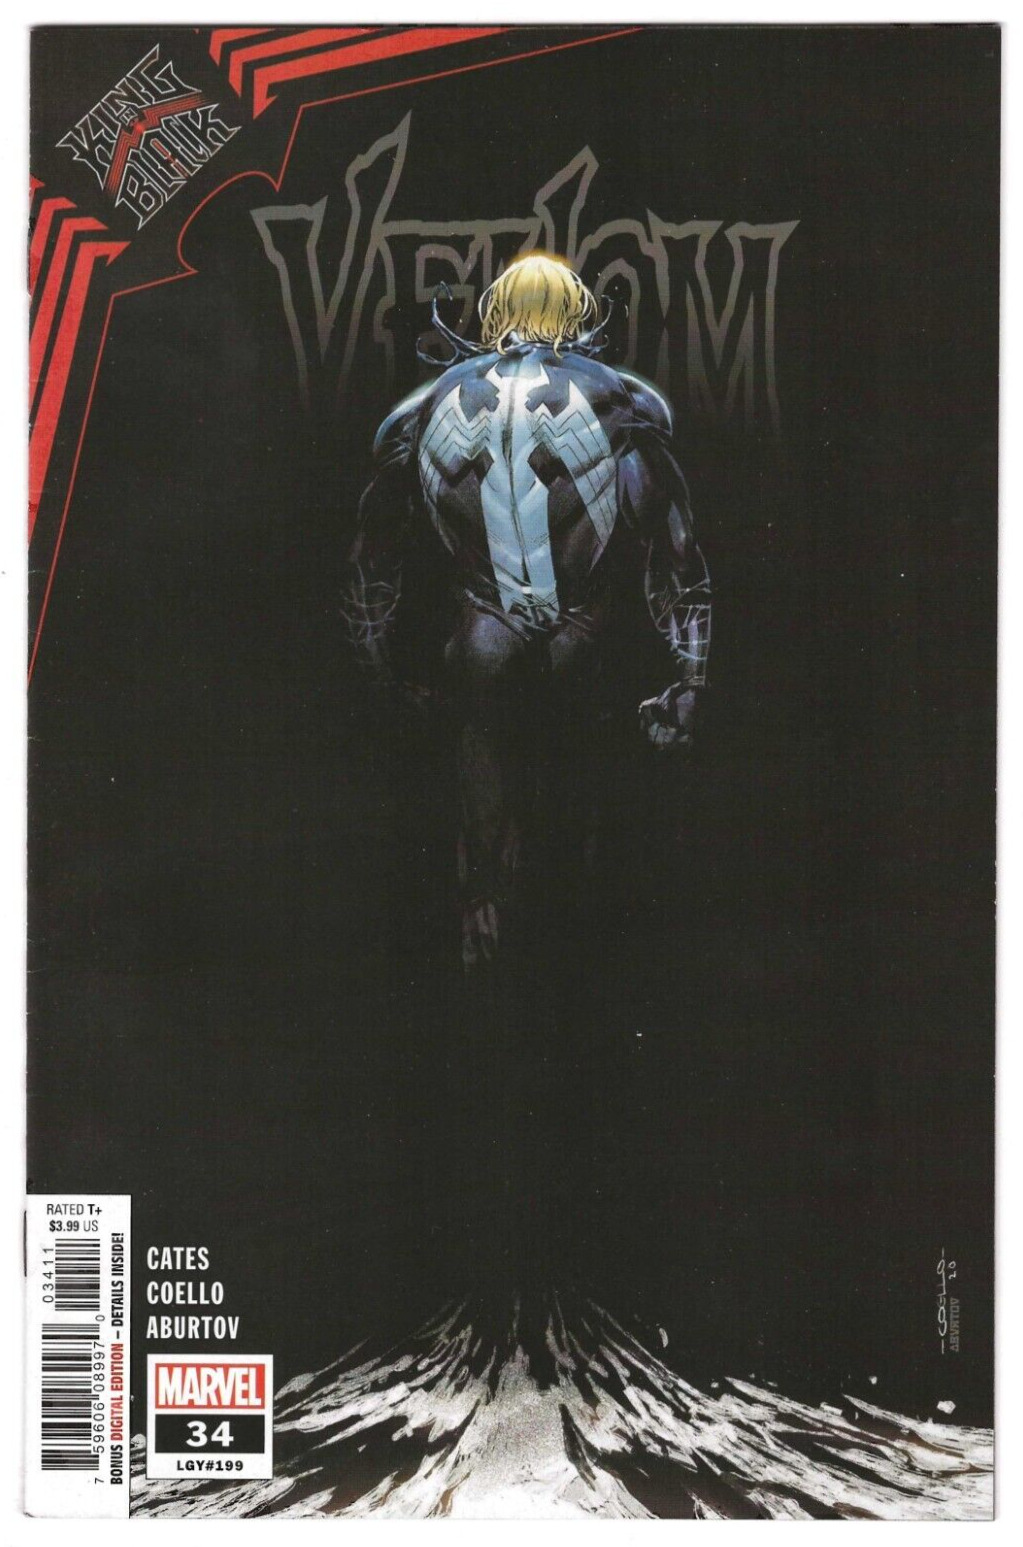 Marvel Comics VENOM #34 first printing cover A